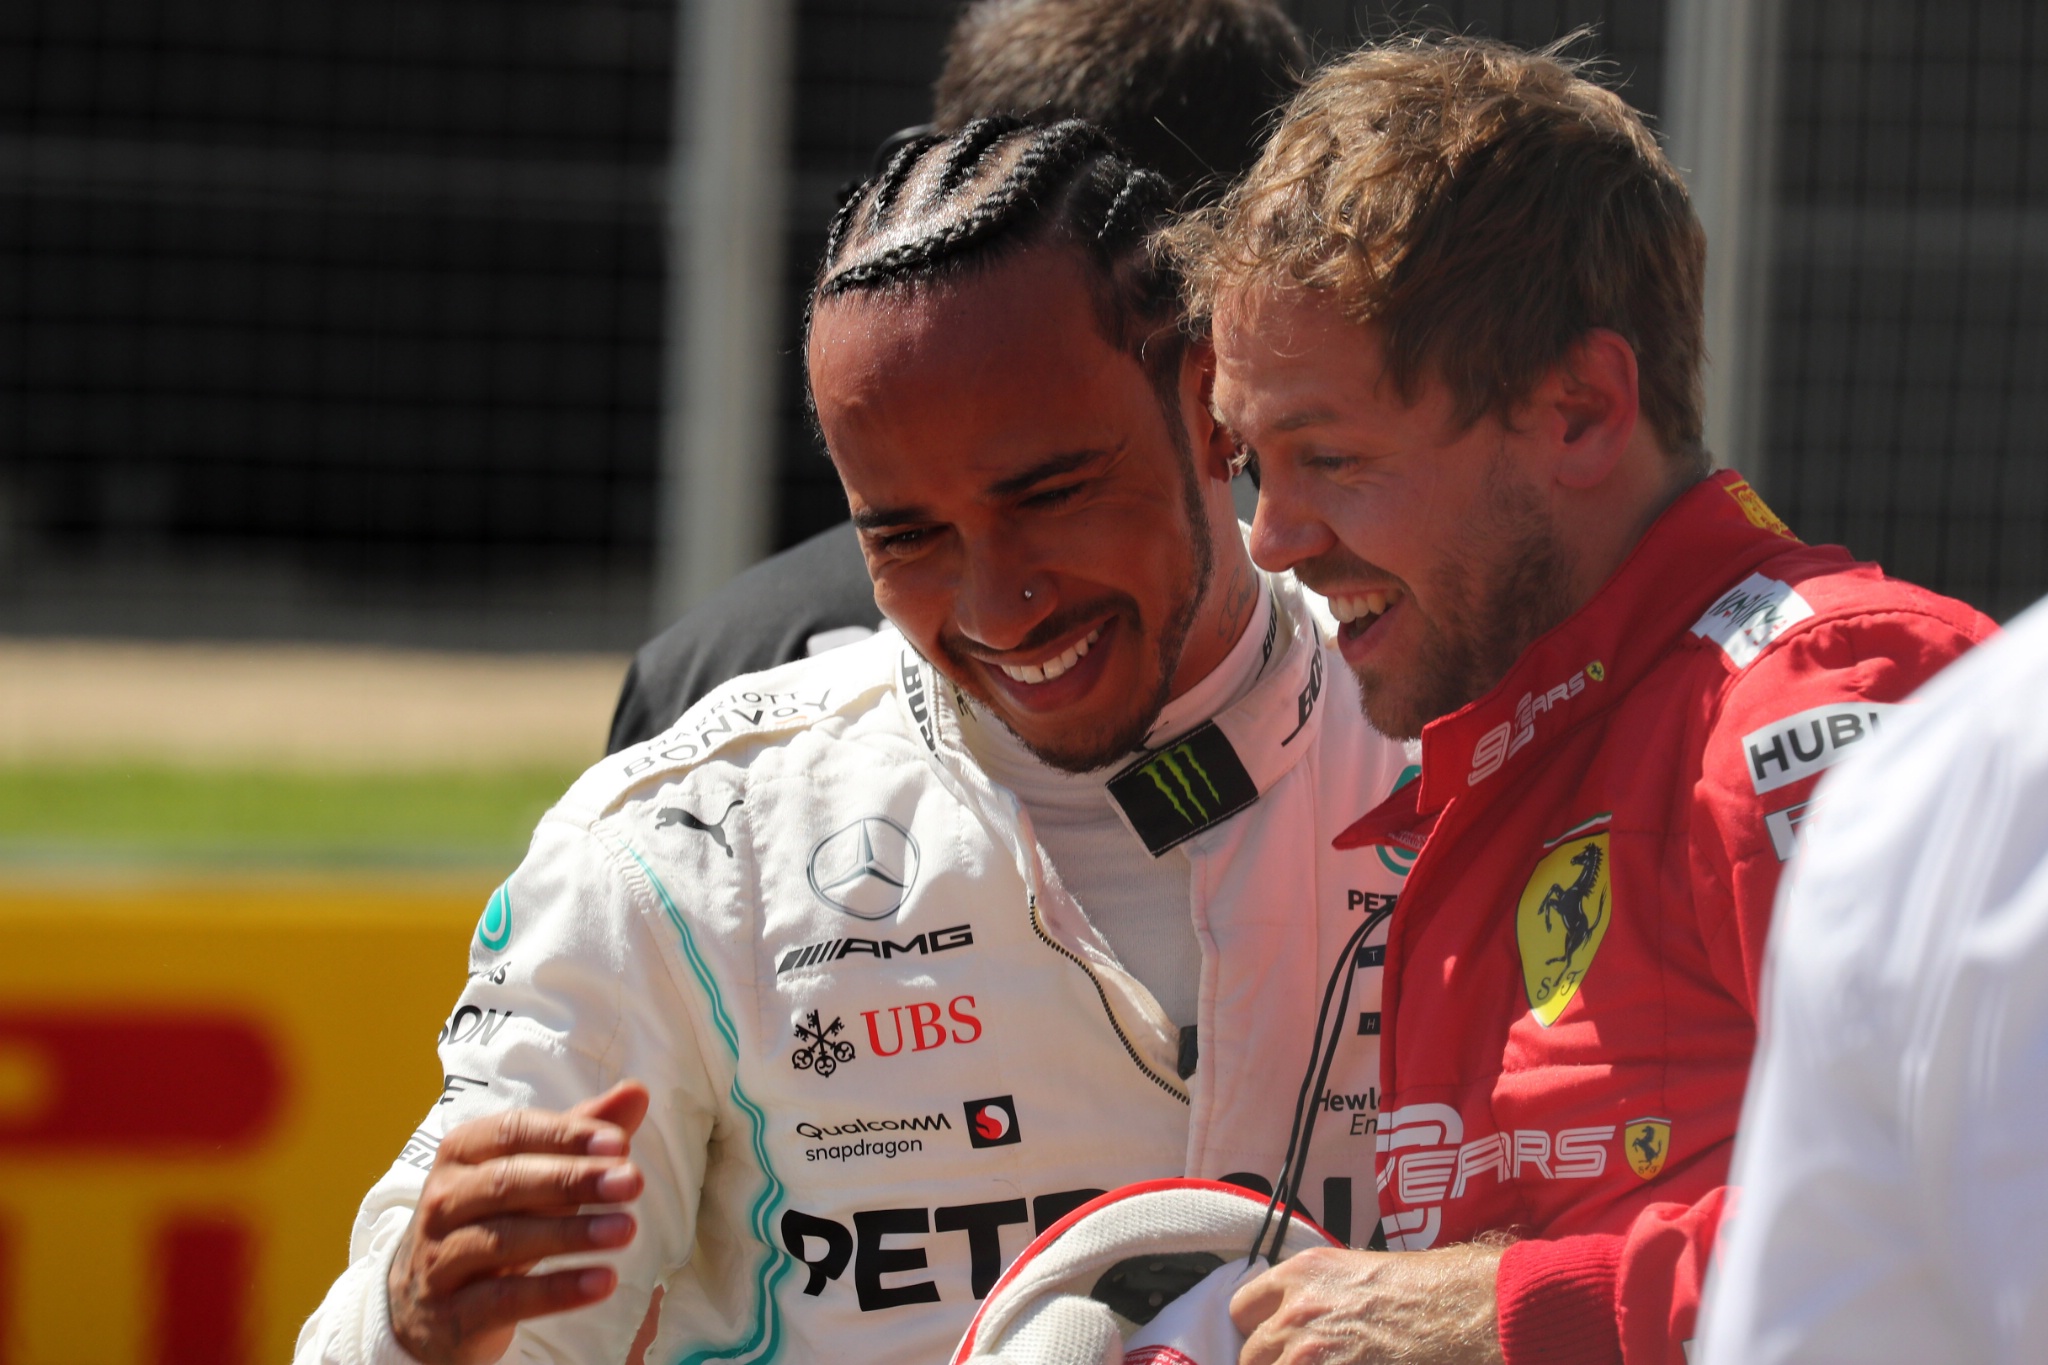  - Kualifikasi, ke-2 tempatkan Lewis Hamilton (GBR) Mercedes AMG F1 W10 dan Sebastian Vettel (GER) Scuderia Ferrari SF90 pole